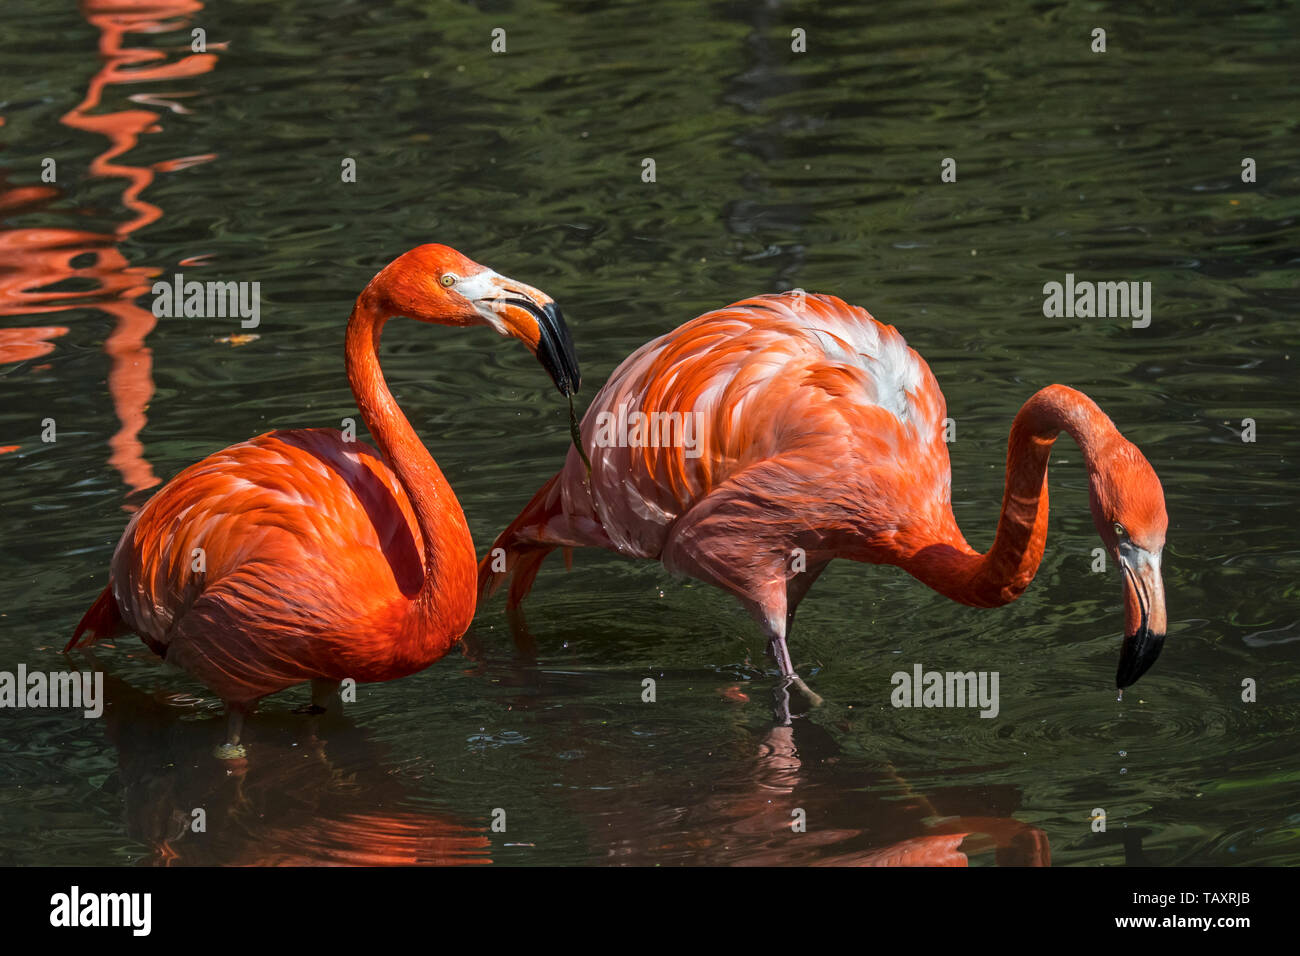 Two American flamingos / Cuban flamingos / Caribbean flamingos (Phoenicopterus ruber) foraging in pond Stock Photo